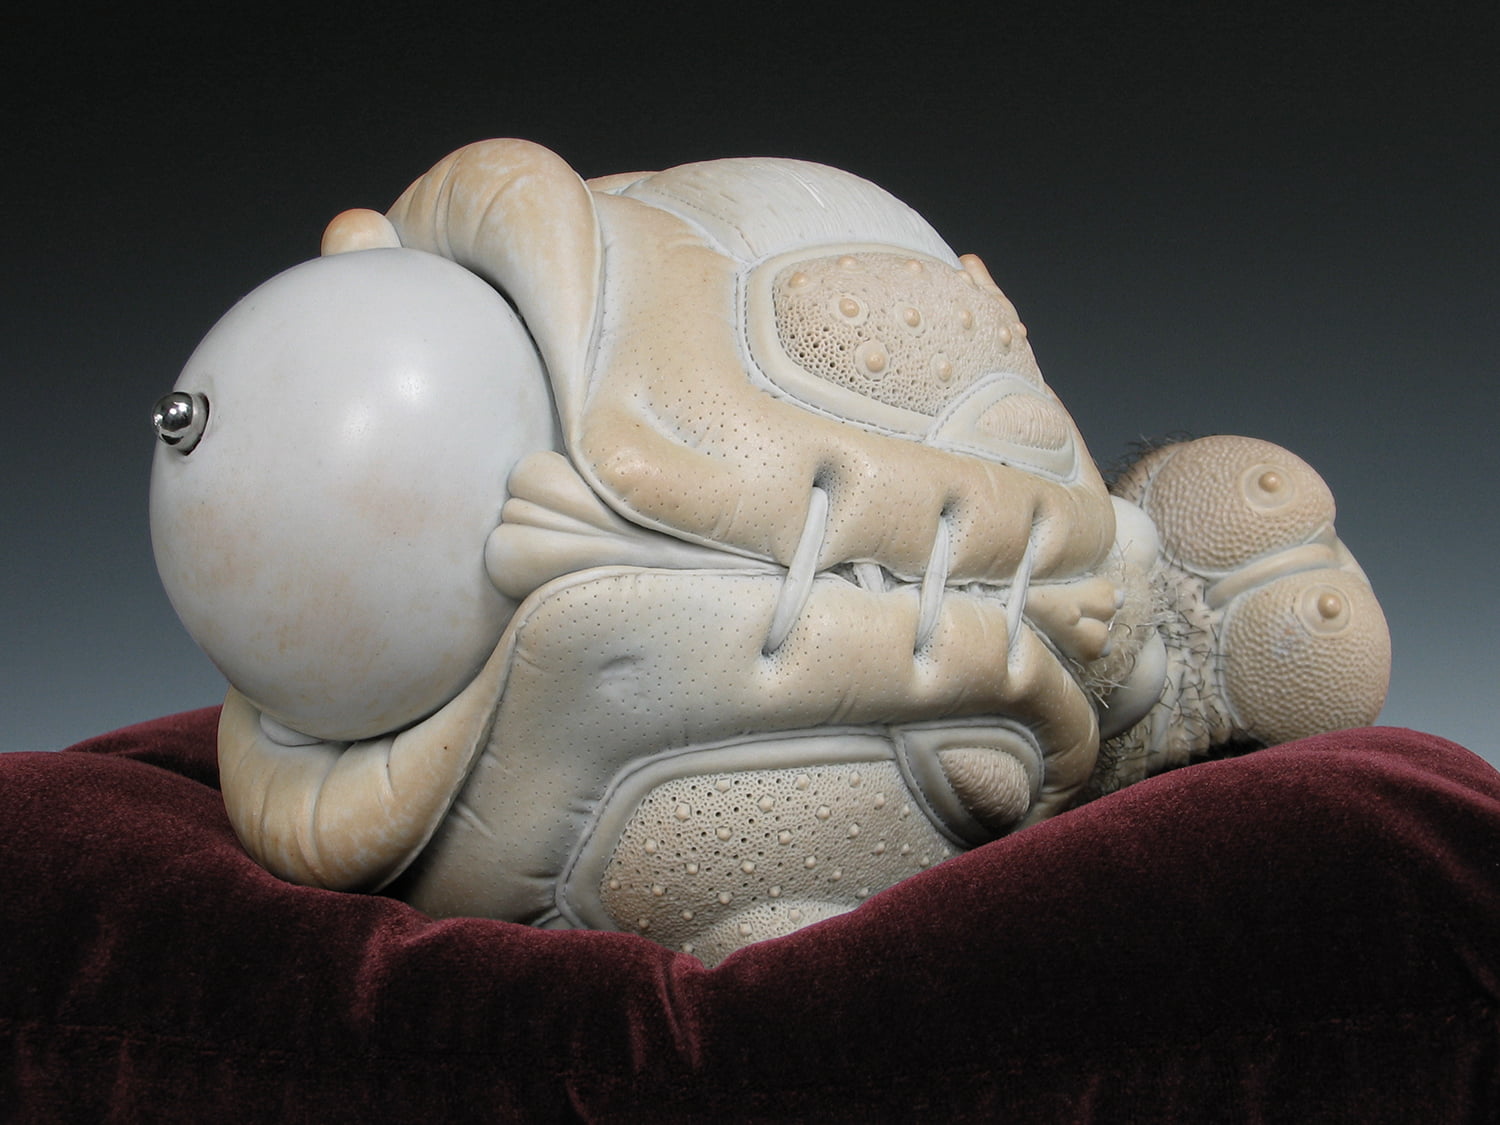 Jason Briggs "Cherry" (alternate view). Porcelain, hair, and mixed media sculptural ceramic art.